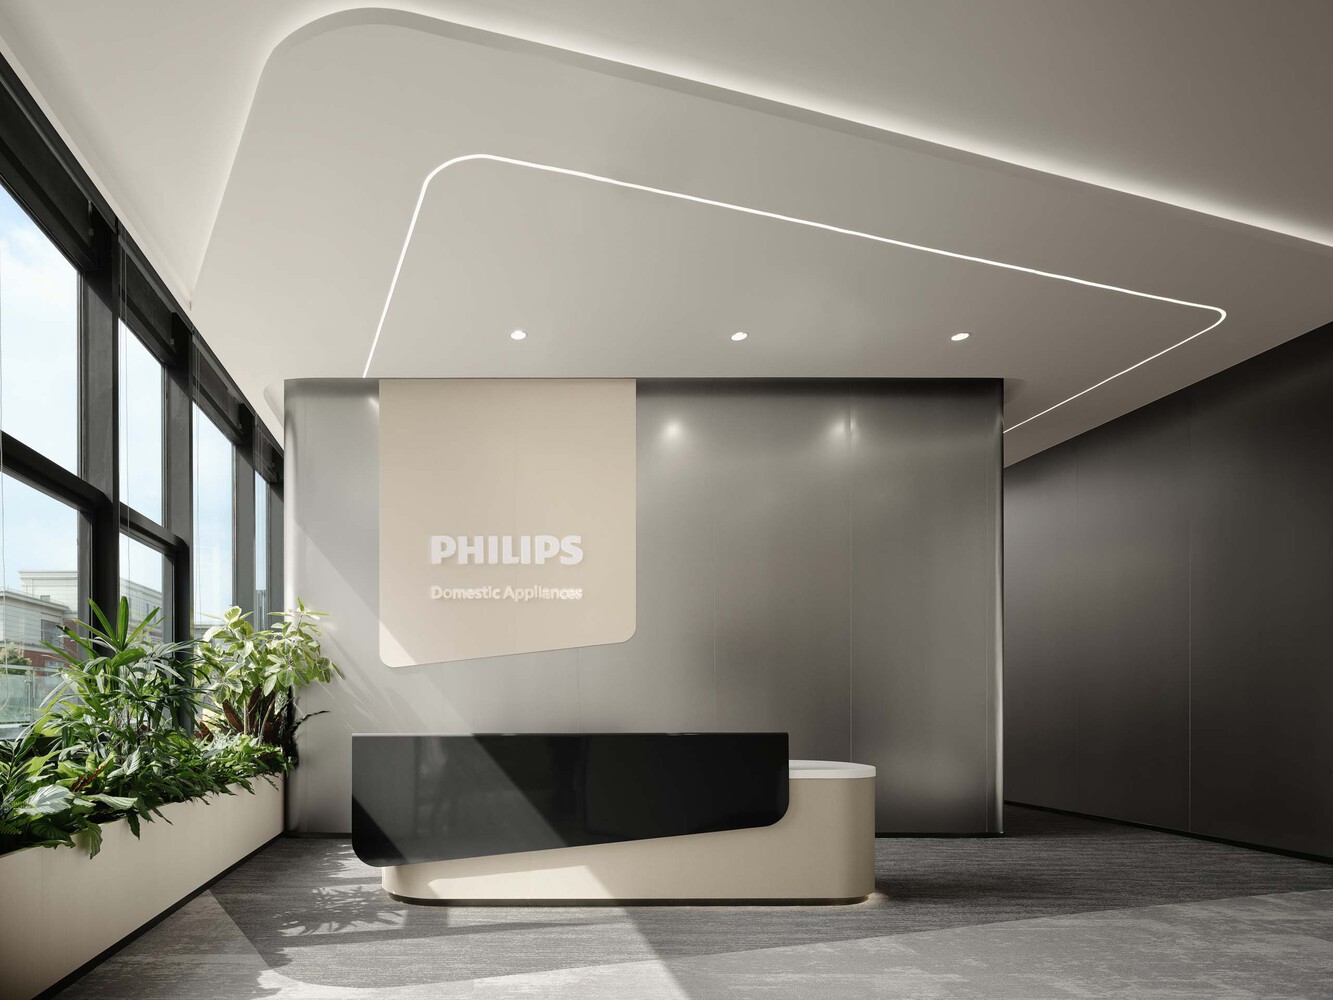 Philips 苏州研发中心 · 苏州 | YSP于市设计